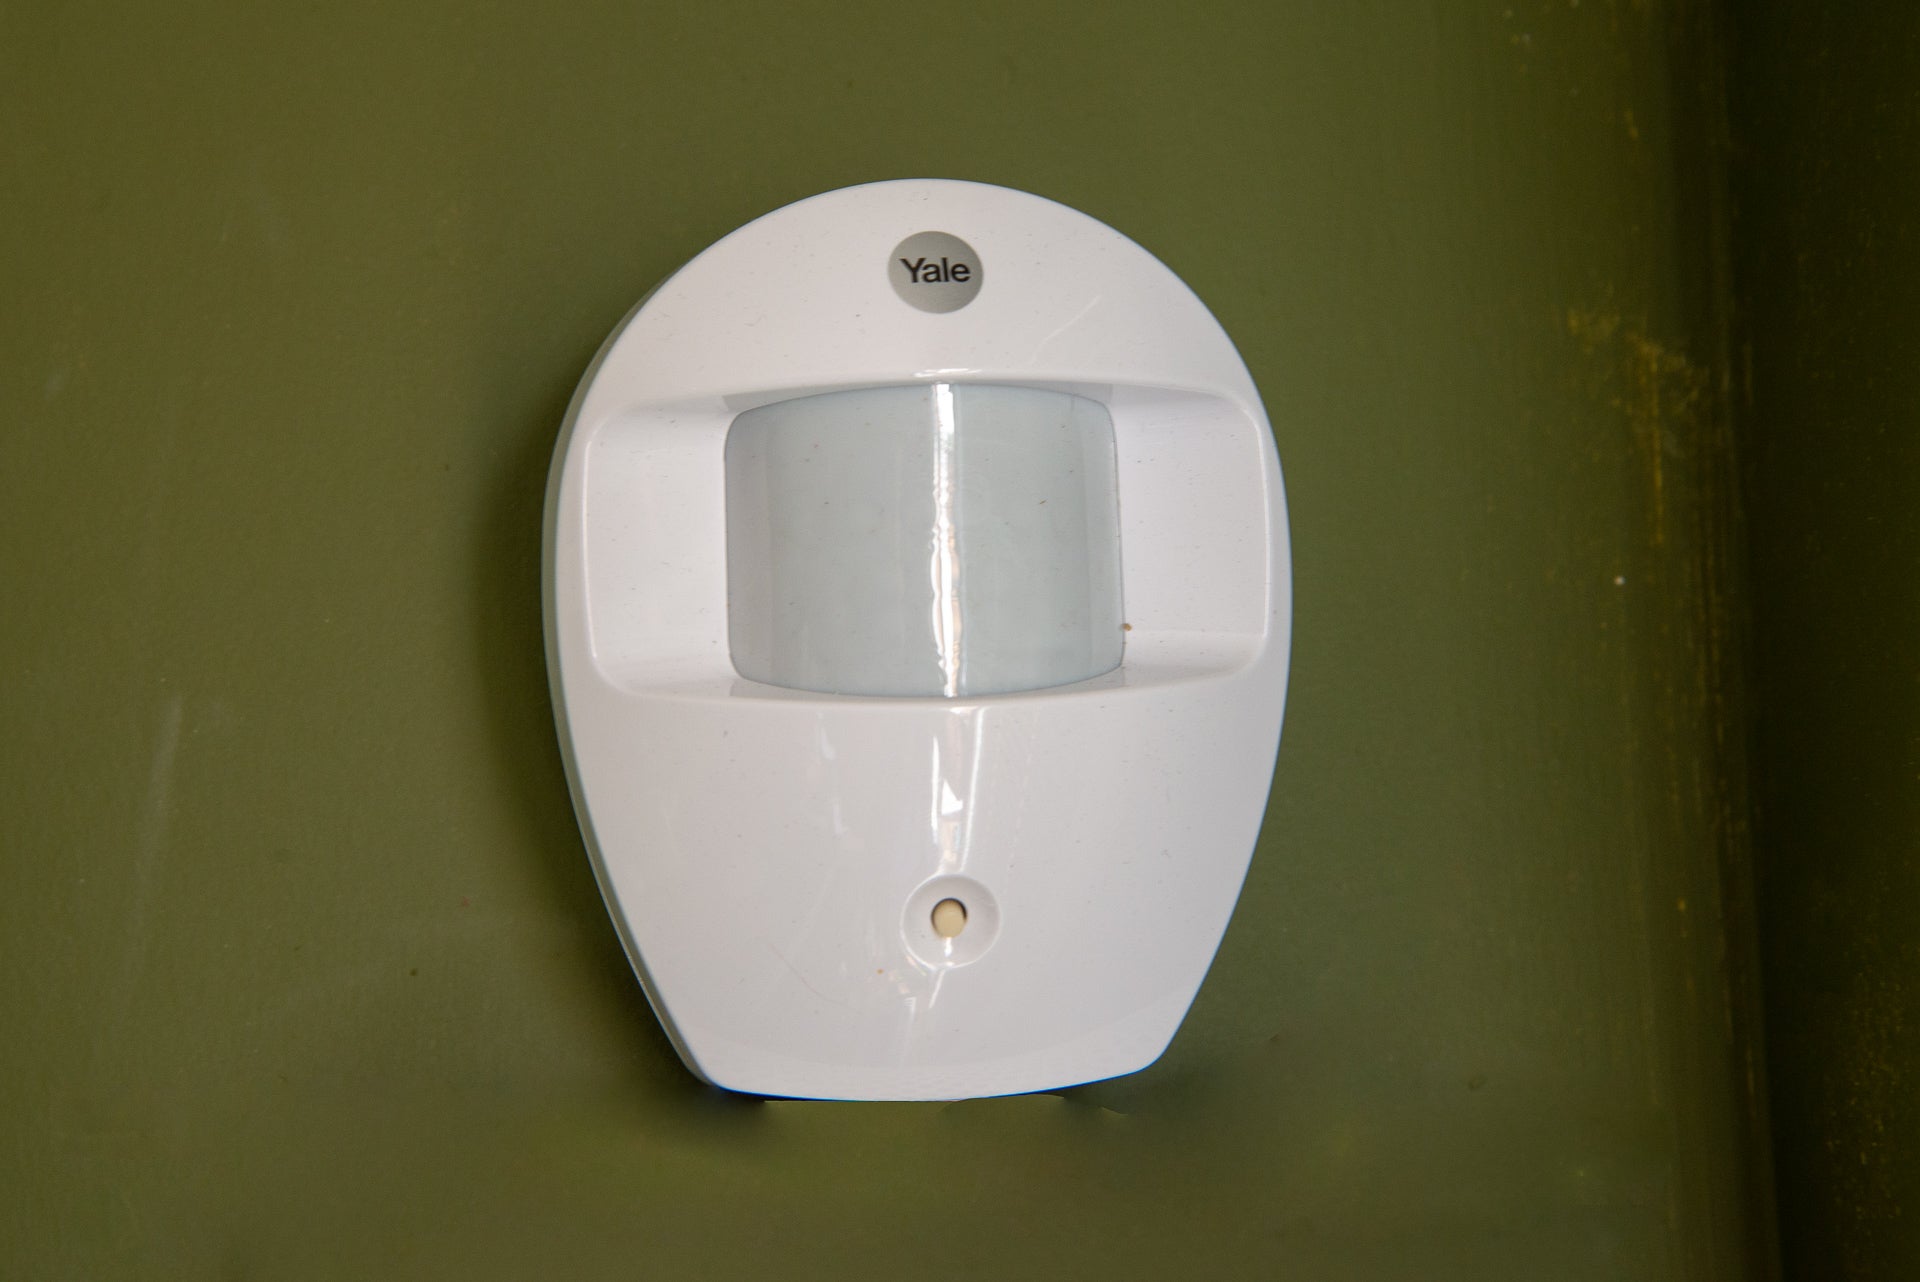 Yale Smart Home Alarm motion sensor